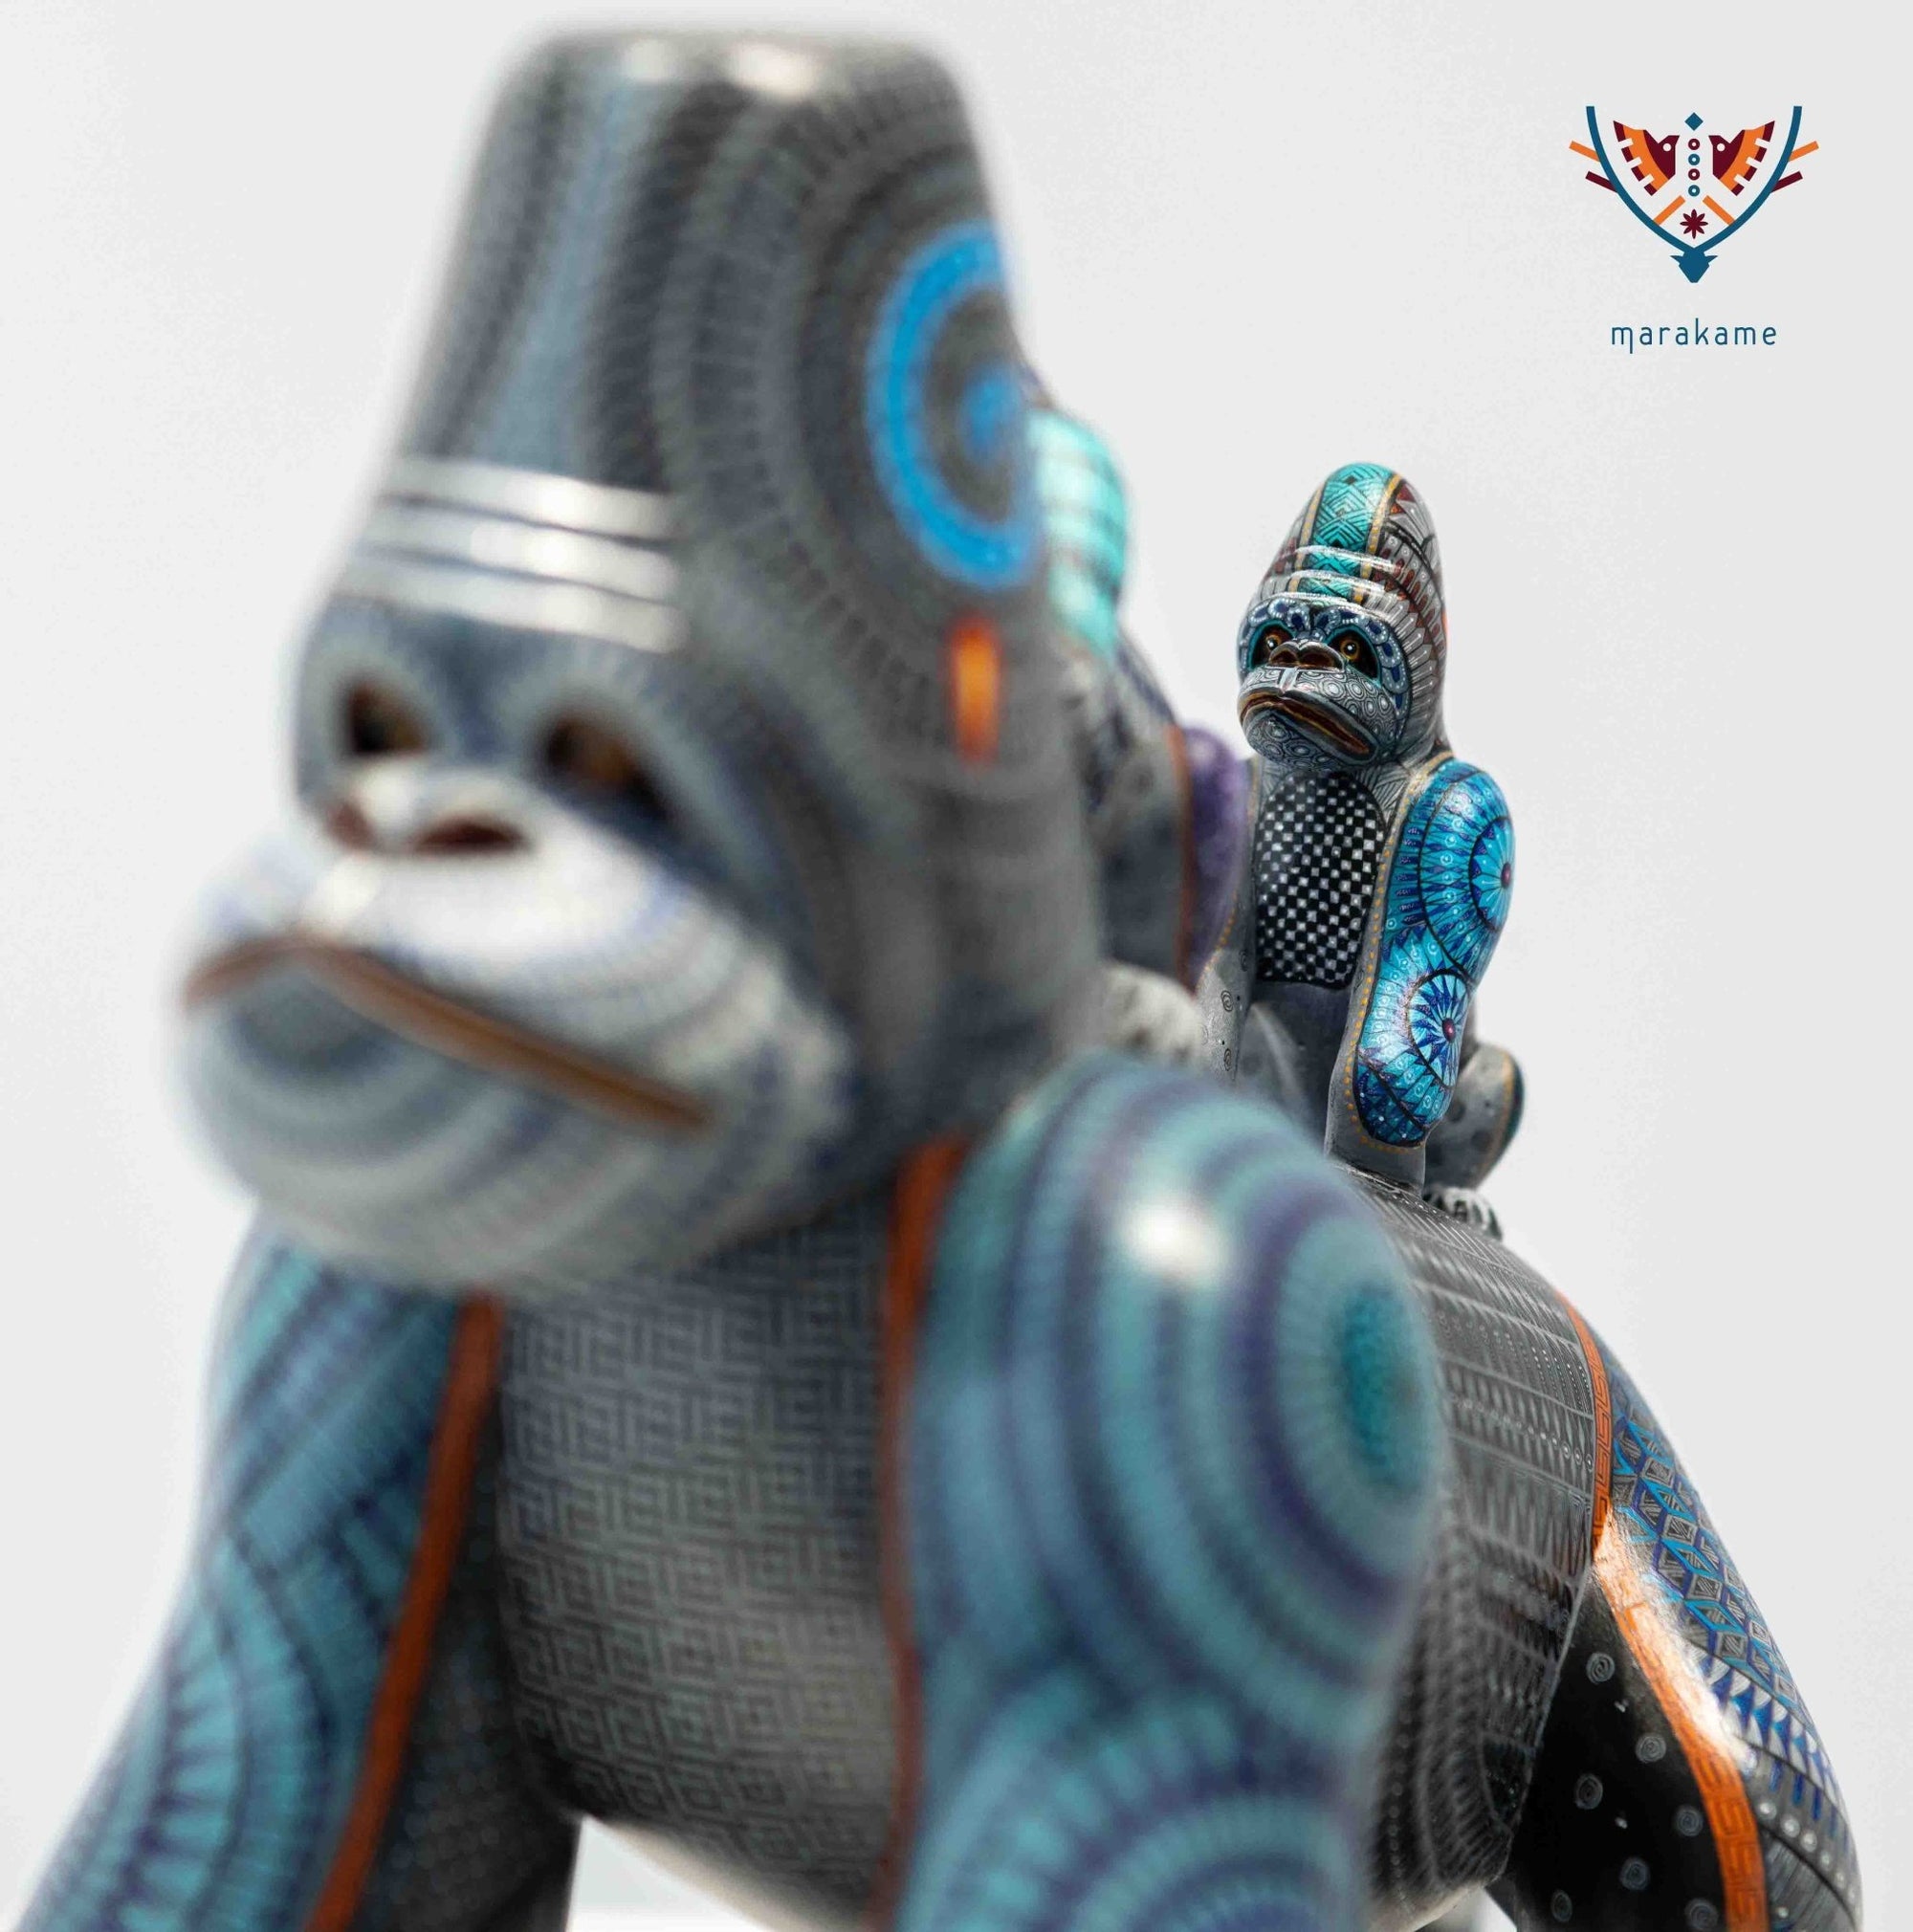 Alebrije Gorilla with babies - Amá mashin - Huichol art - Marakame